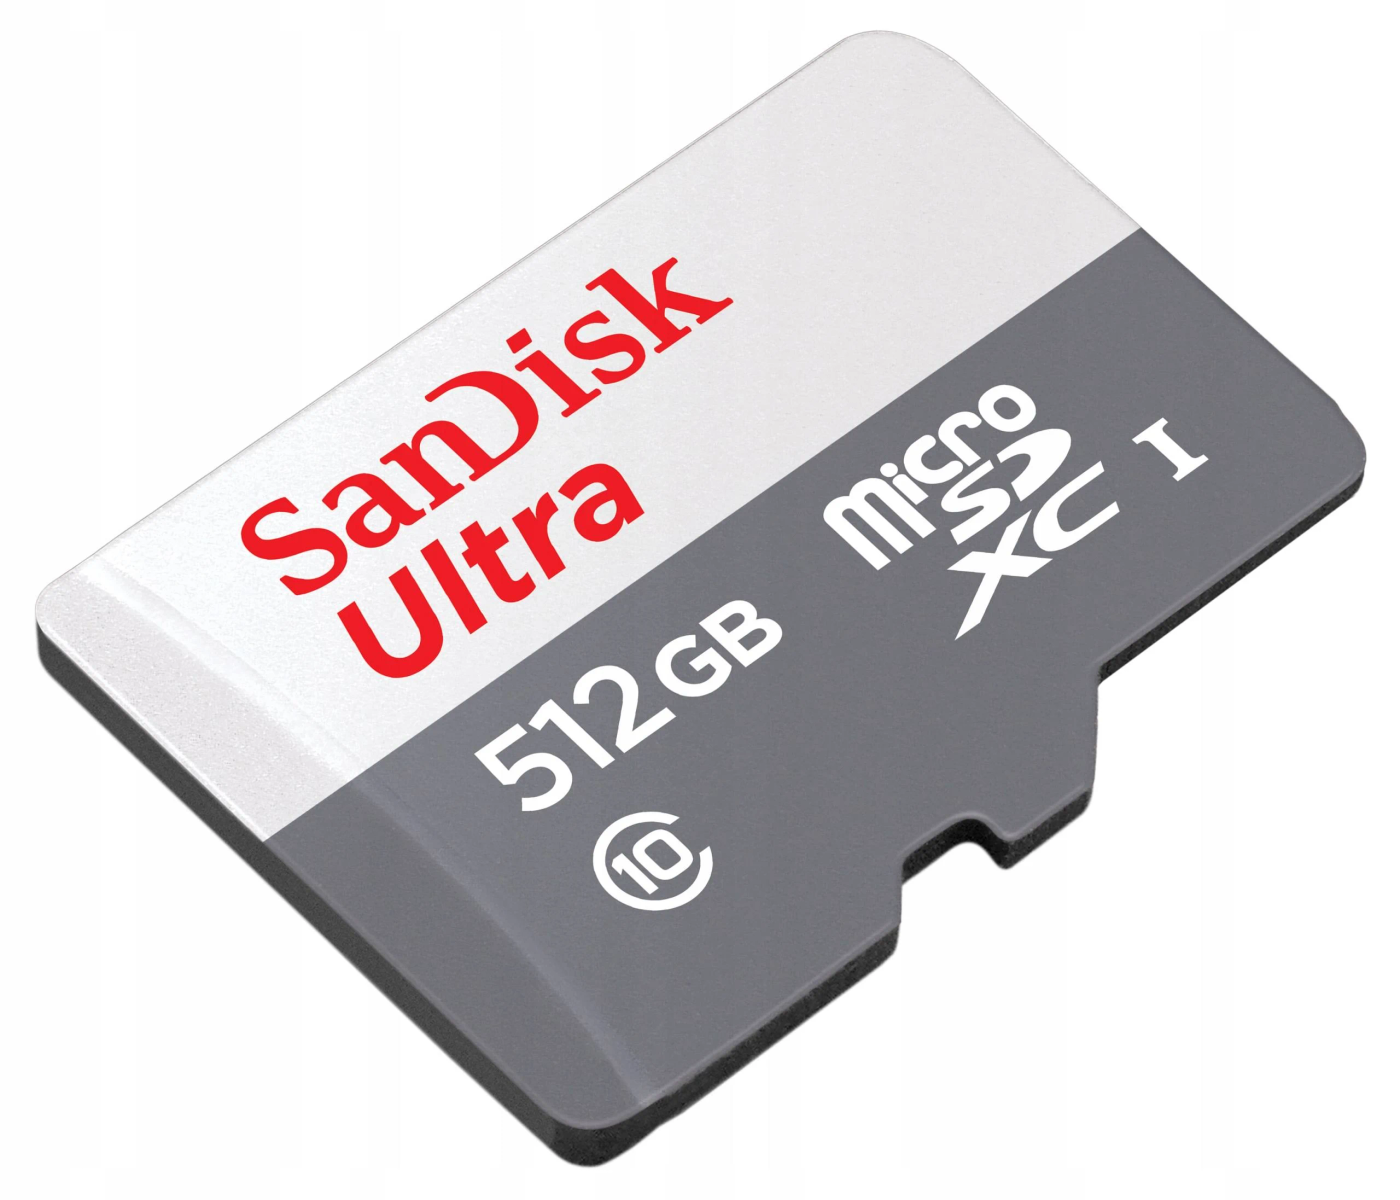 SANDISK Ultra, Micro-SD 100 Speicherkarte, 512 GB, MB/s